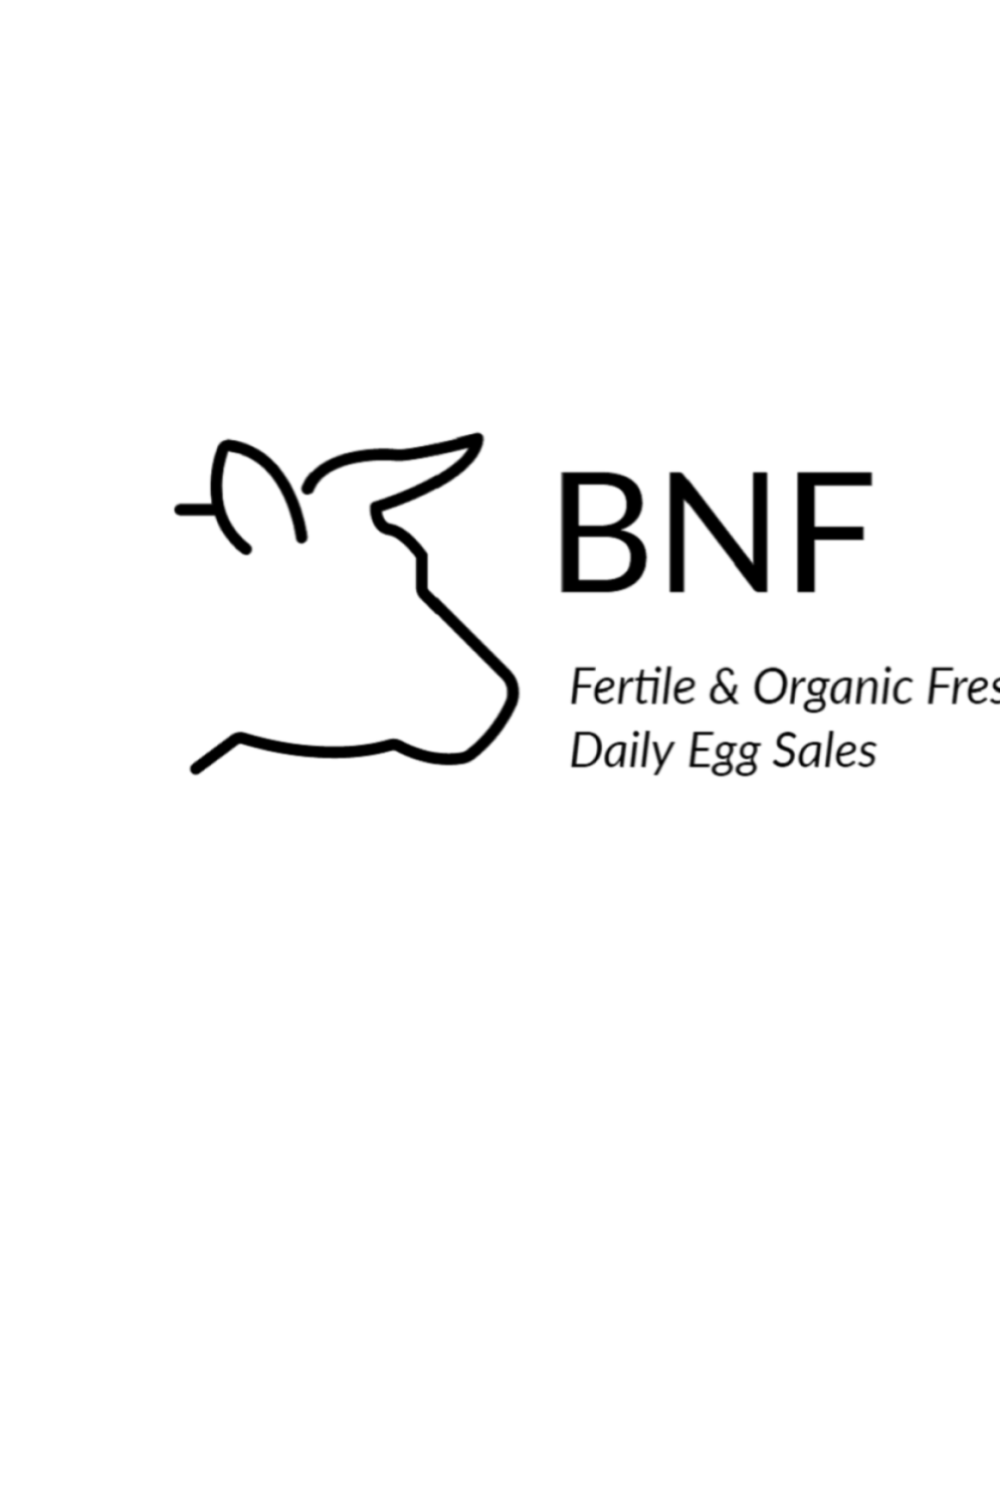 BNF letter farm logo pinterest preview image.